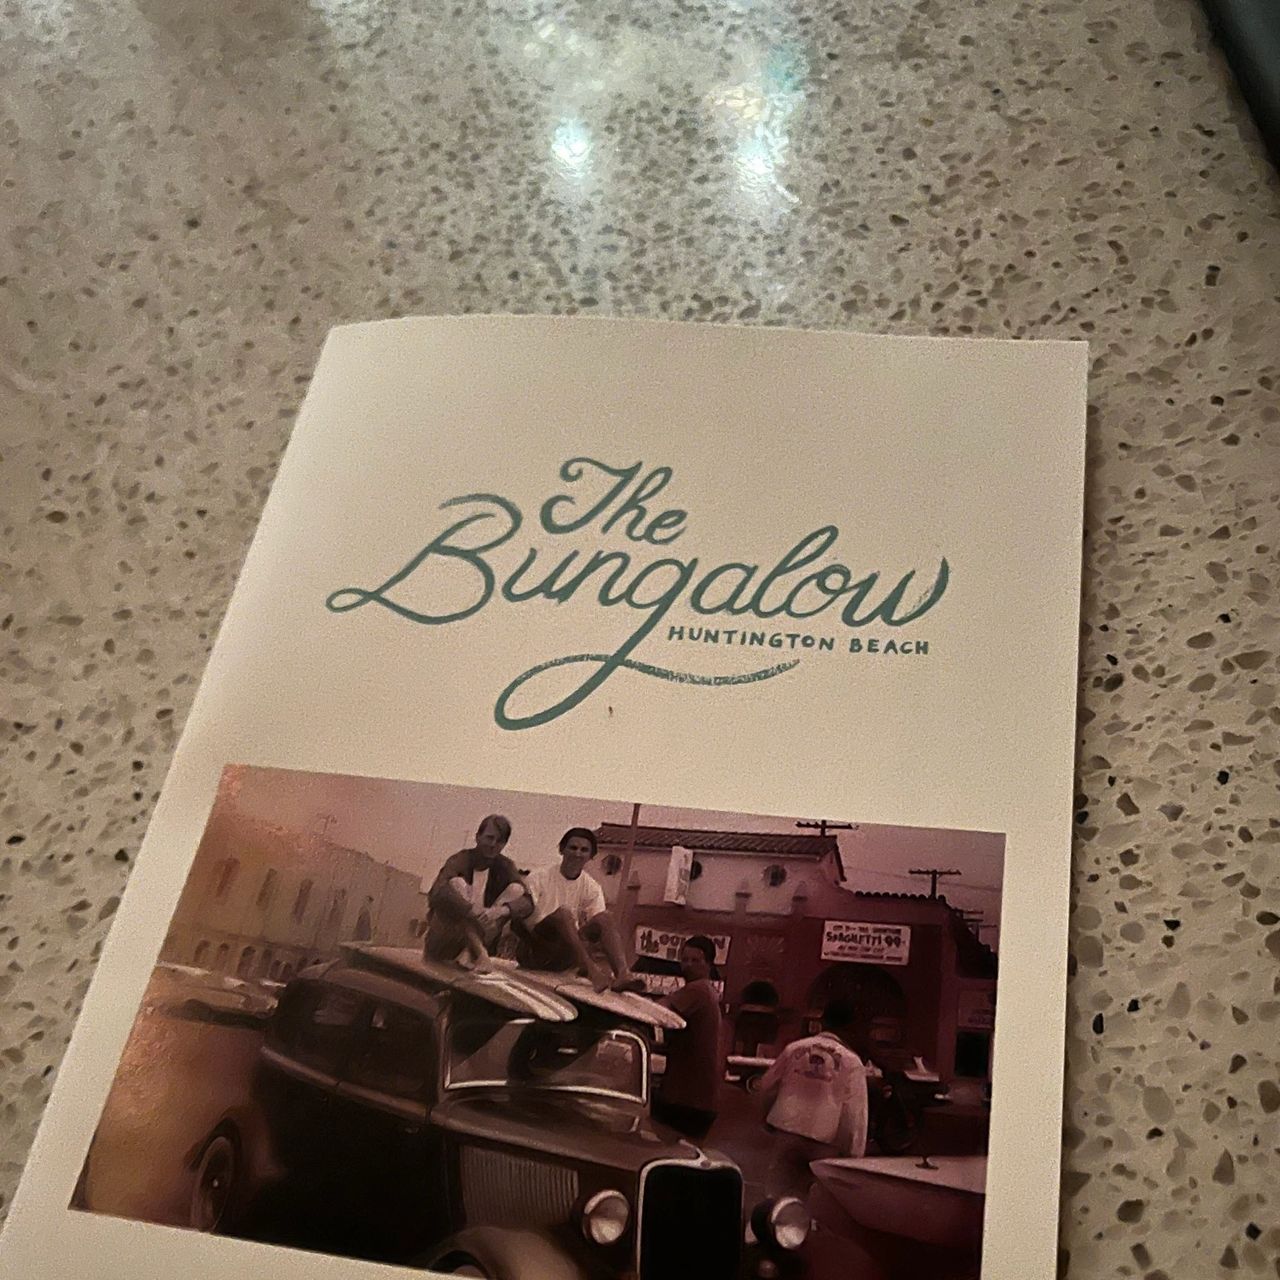 The Bungalow menu